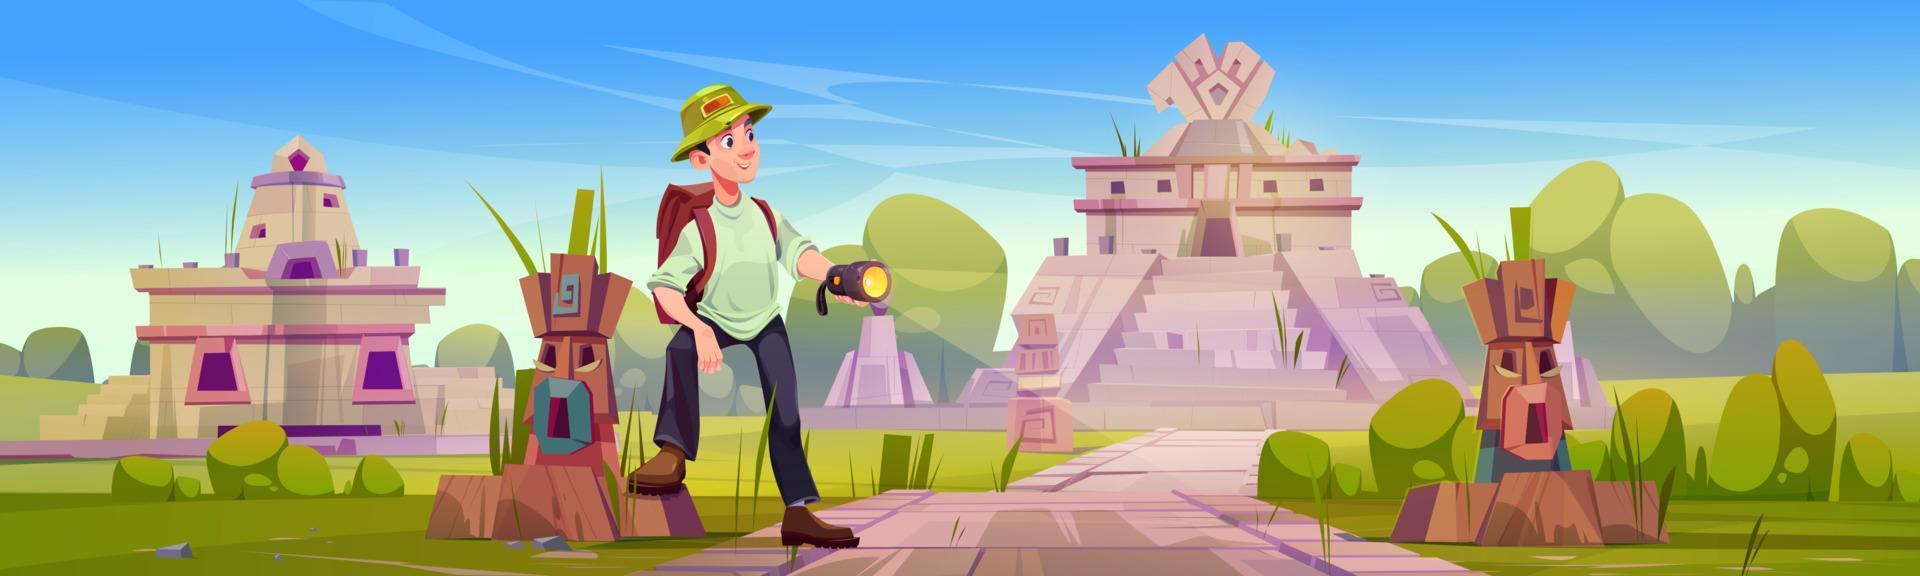 homem turista explorar antigas ruínas astecas vetor